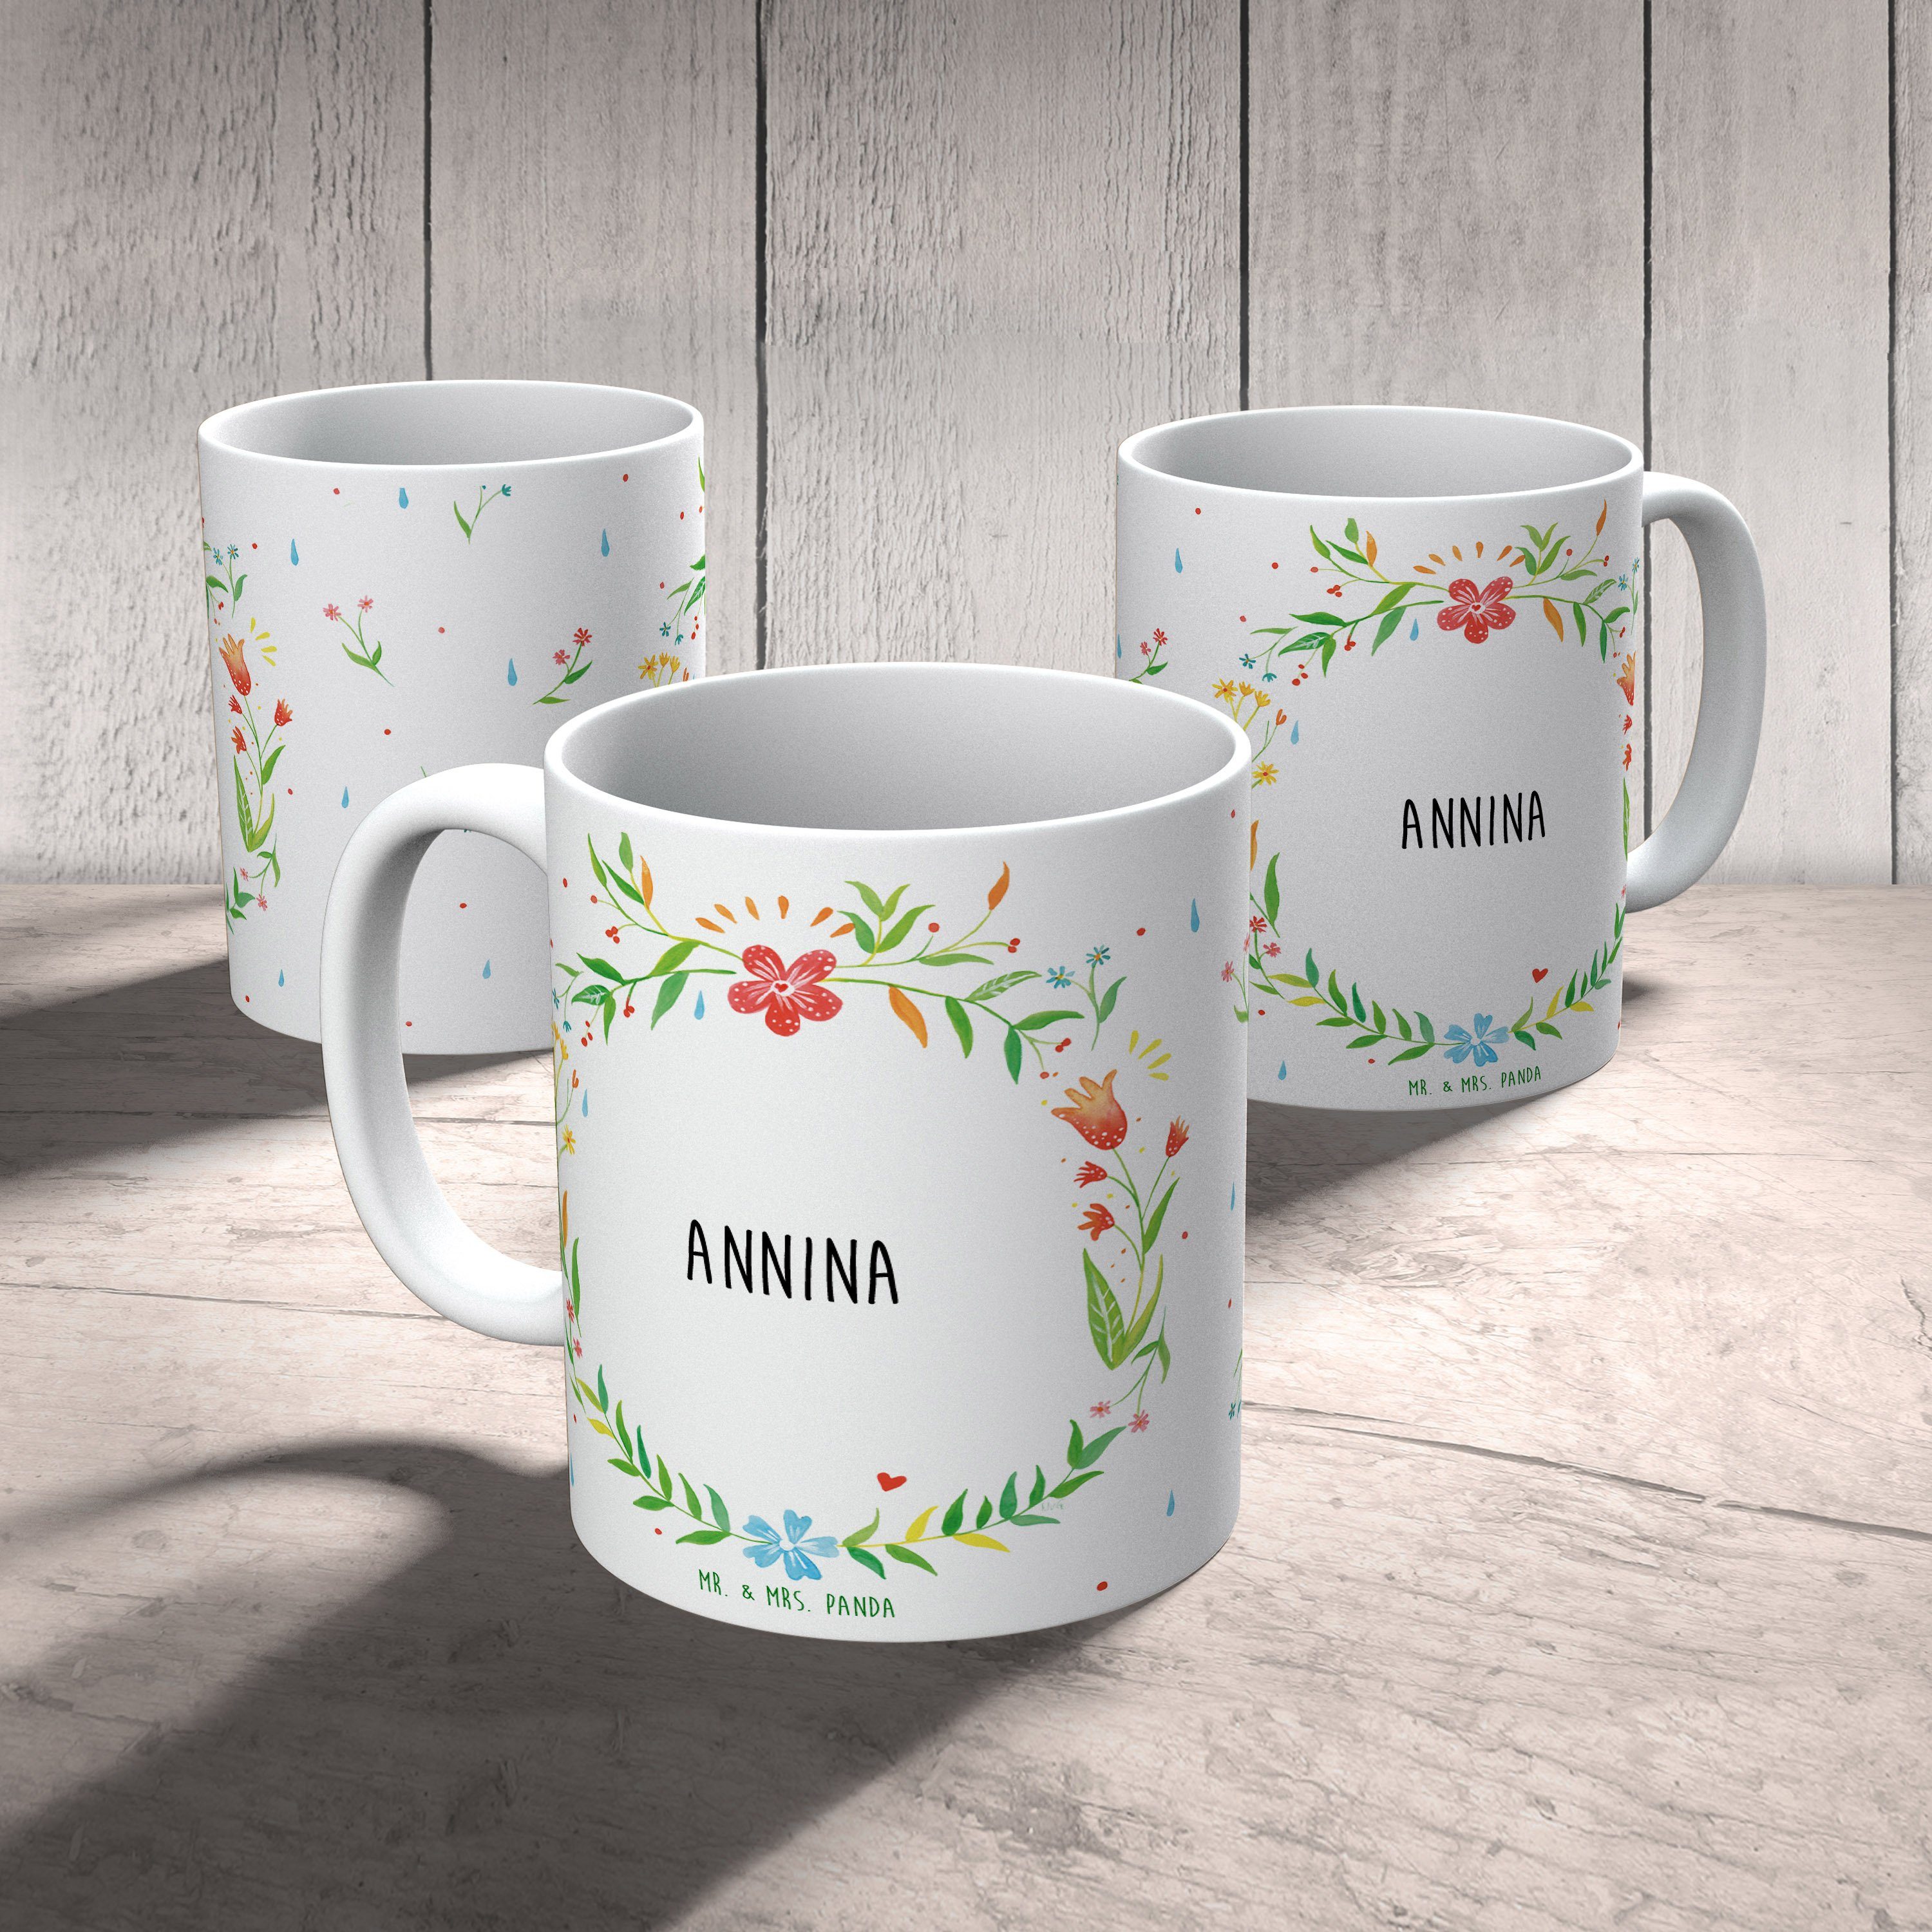 Mr. & Mrs. Panda Becher, Geschenk, Tasse, - Tasse Tasse Keramik Sp, Annina Keramiktasse, Kaffeetasse